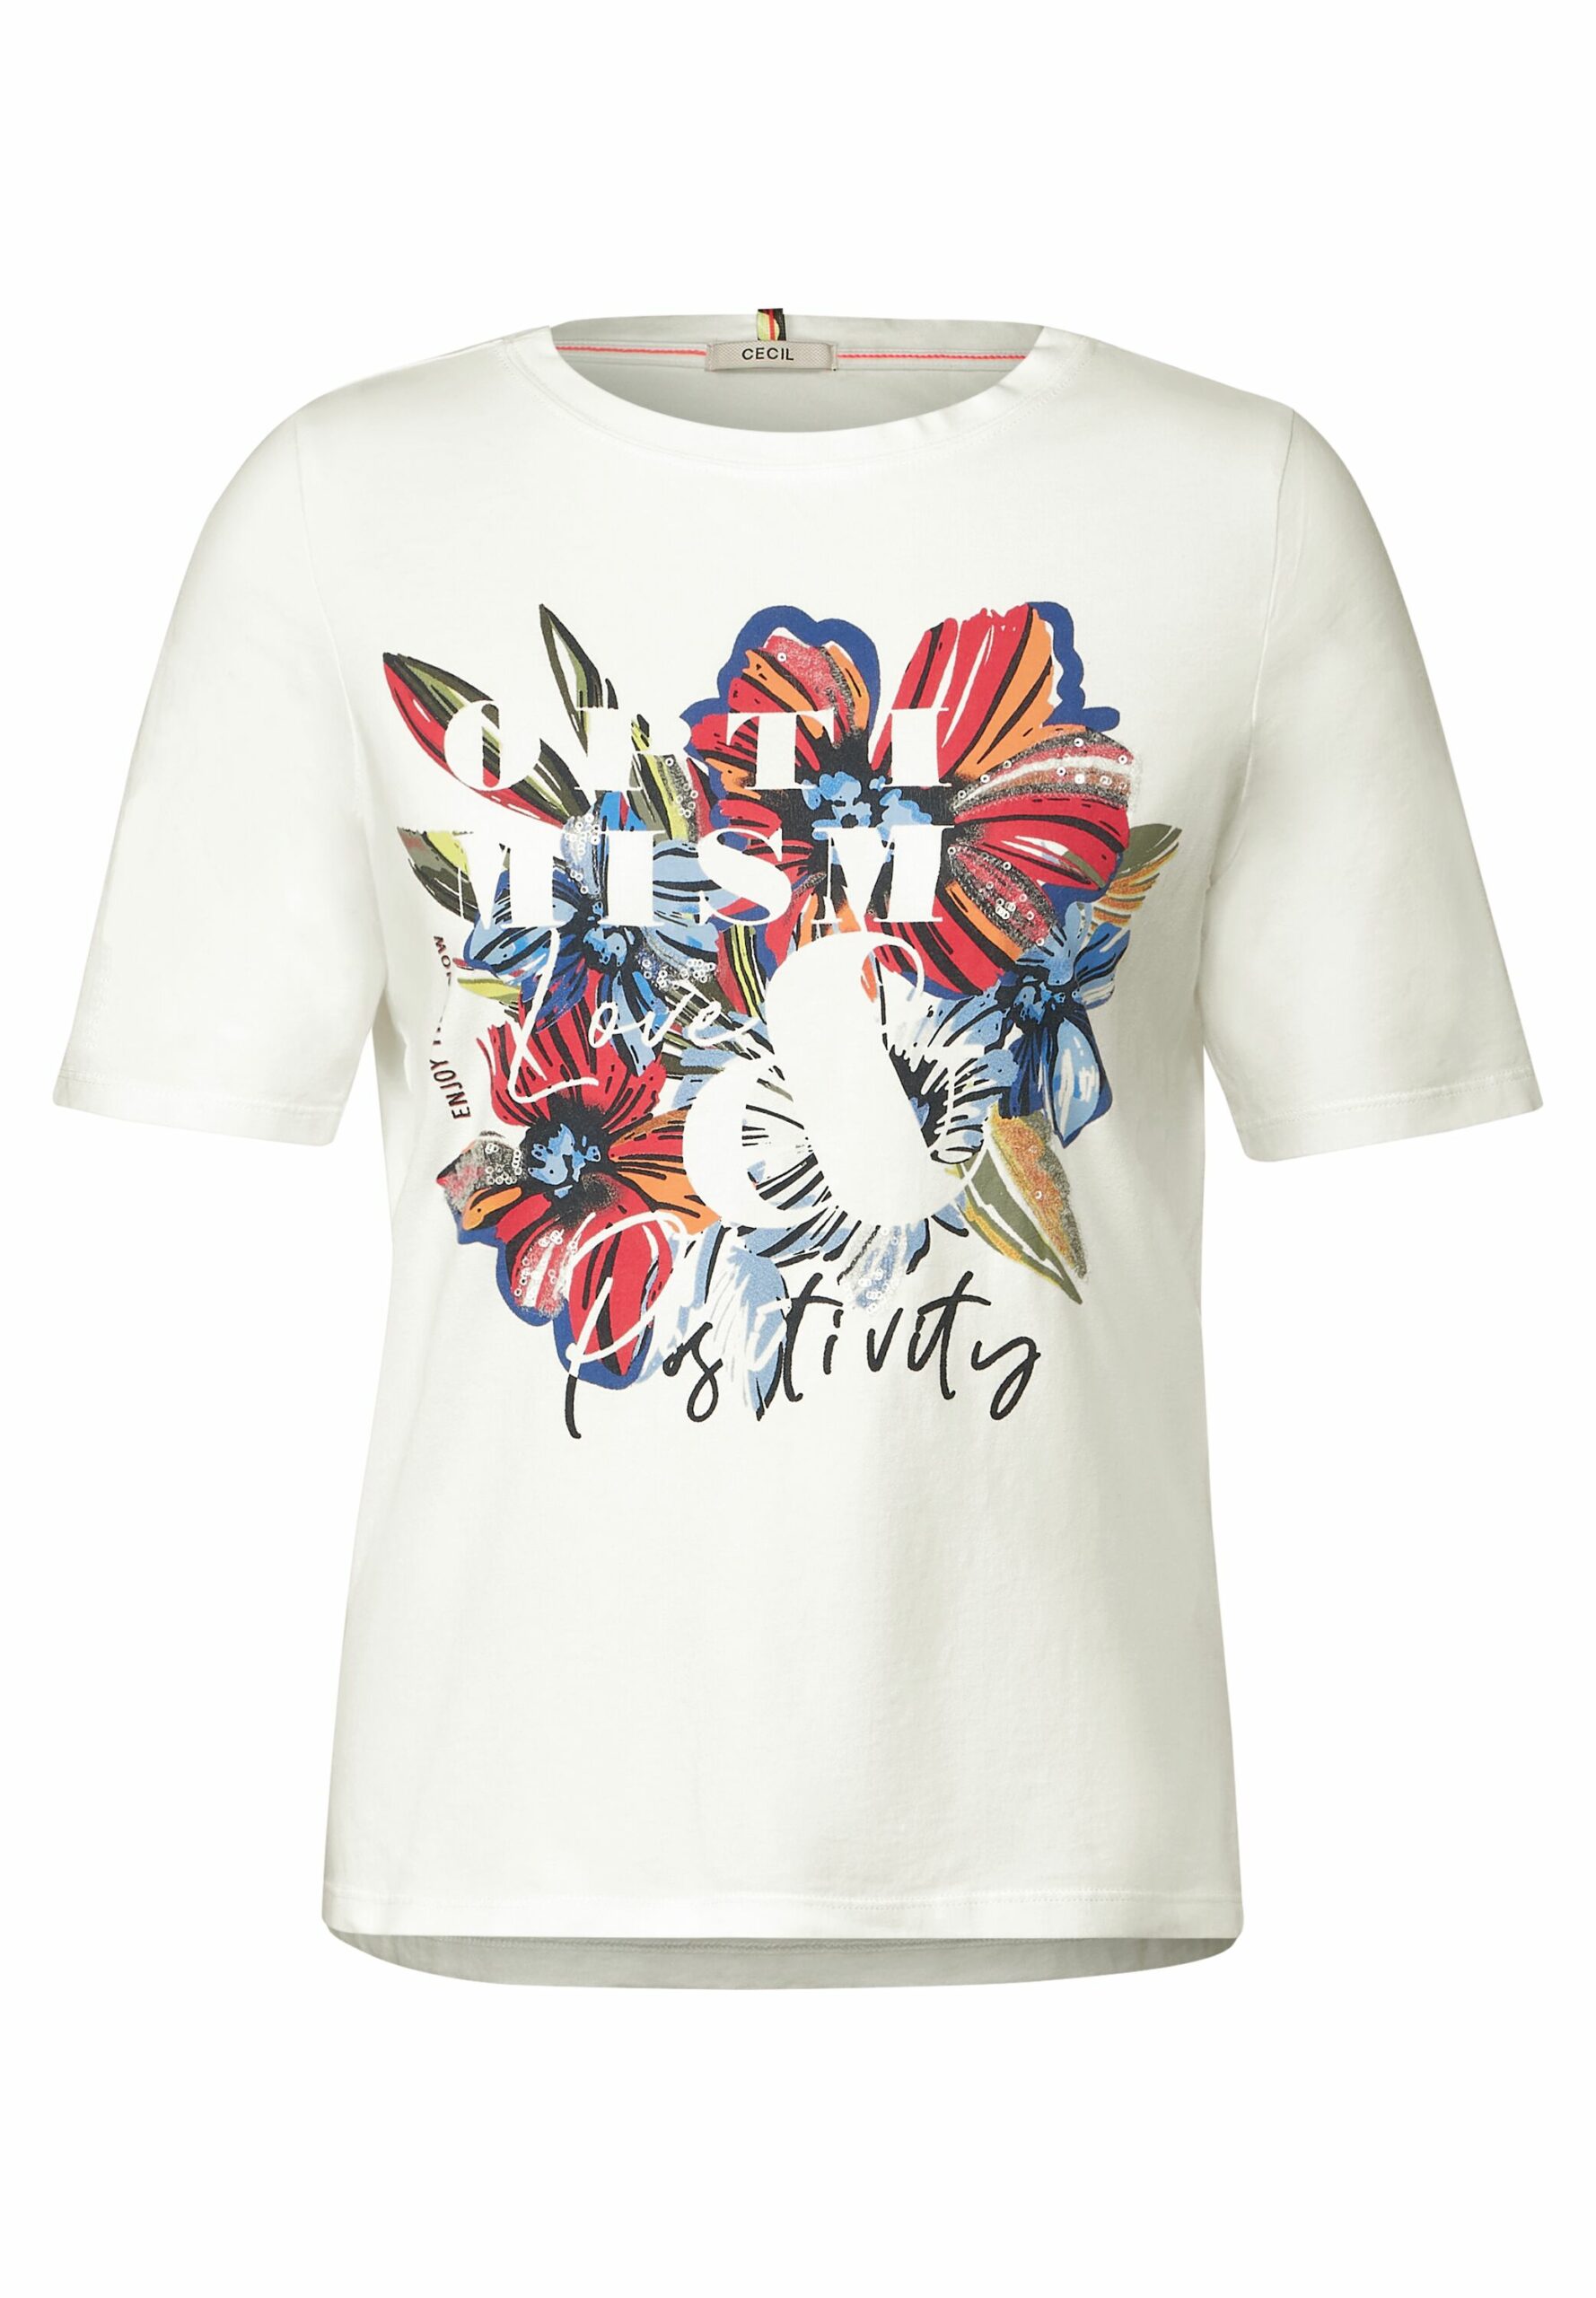 Webshop - Damen Kamlage CECIL Modehaus T-Shirt